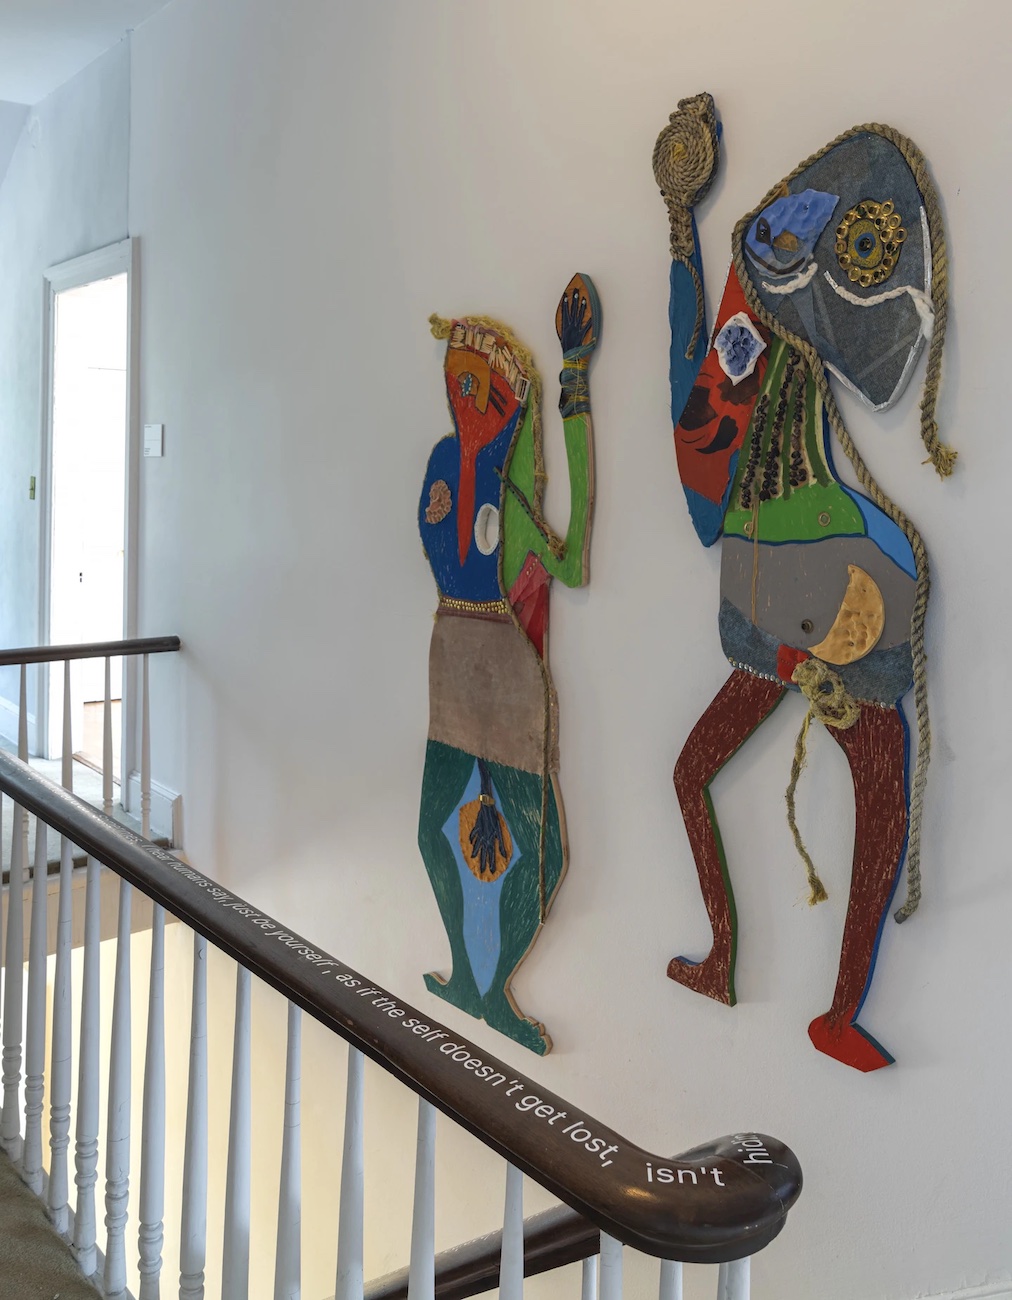 Installation view of Tamar Ettun's artworks